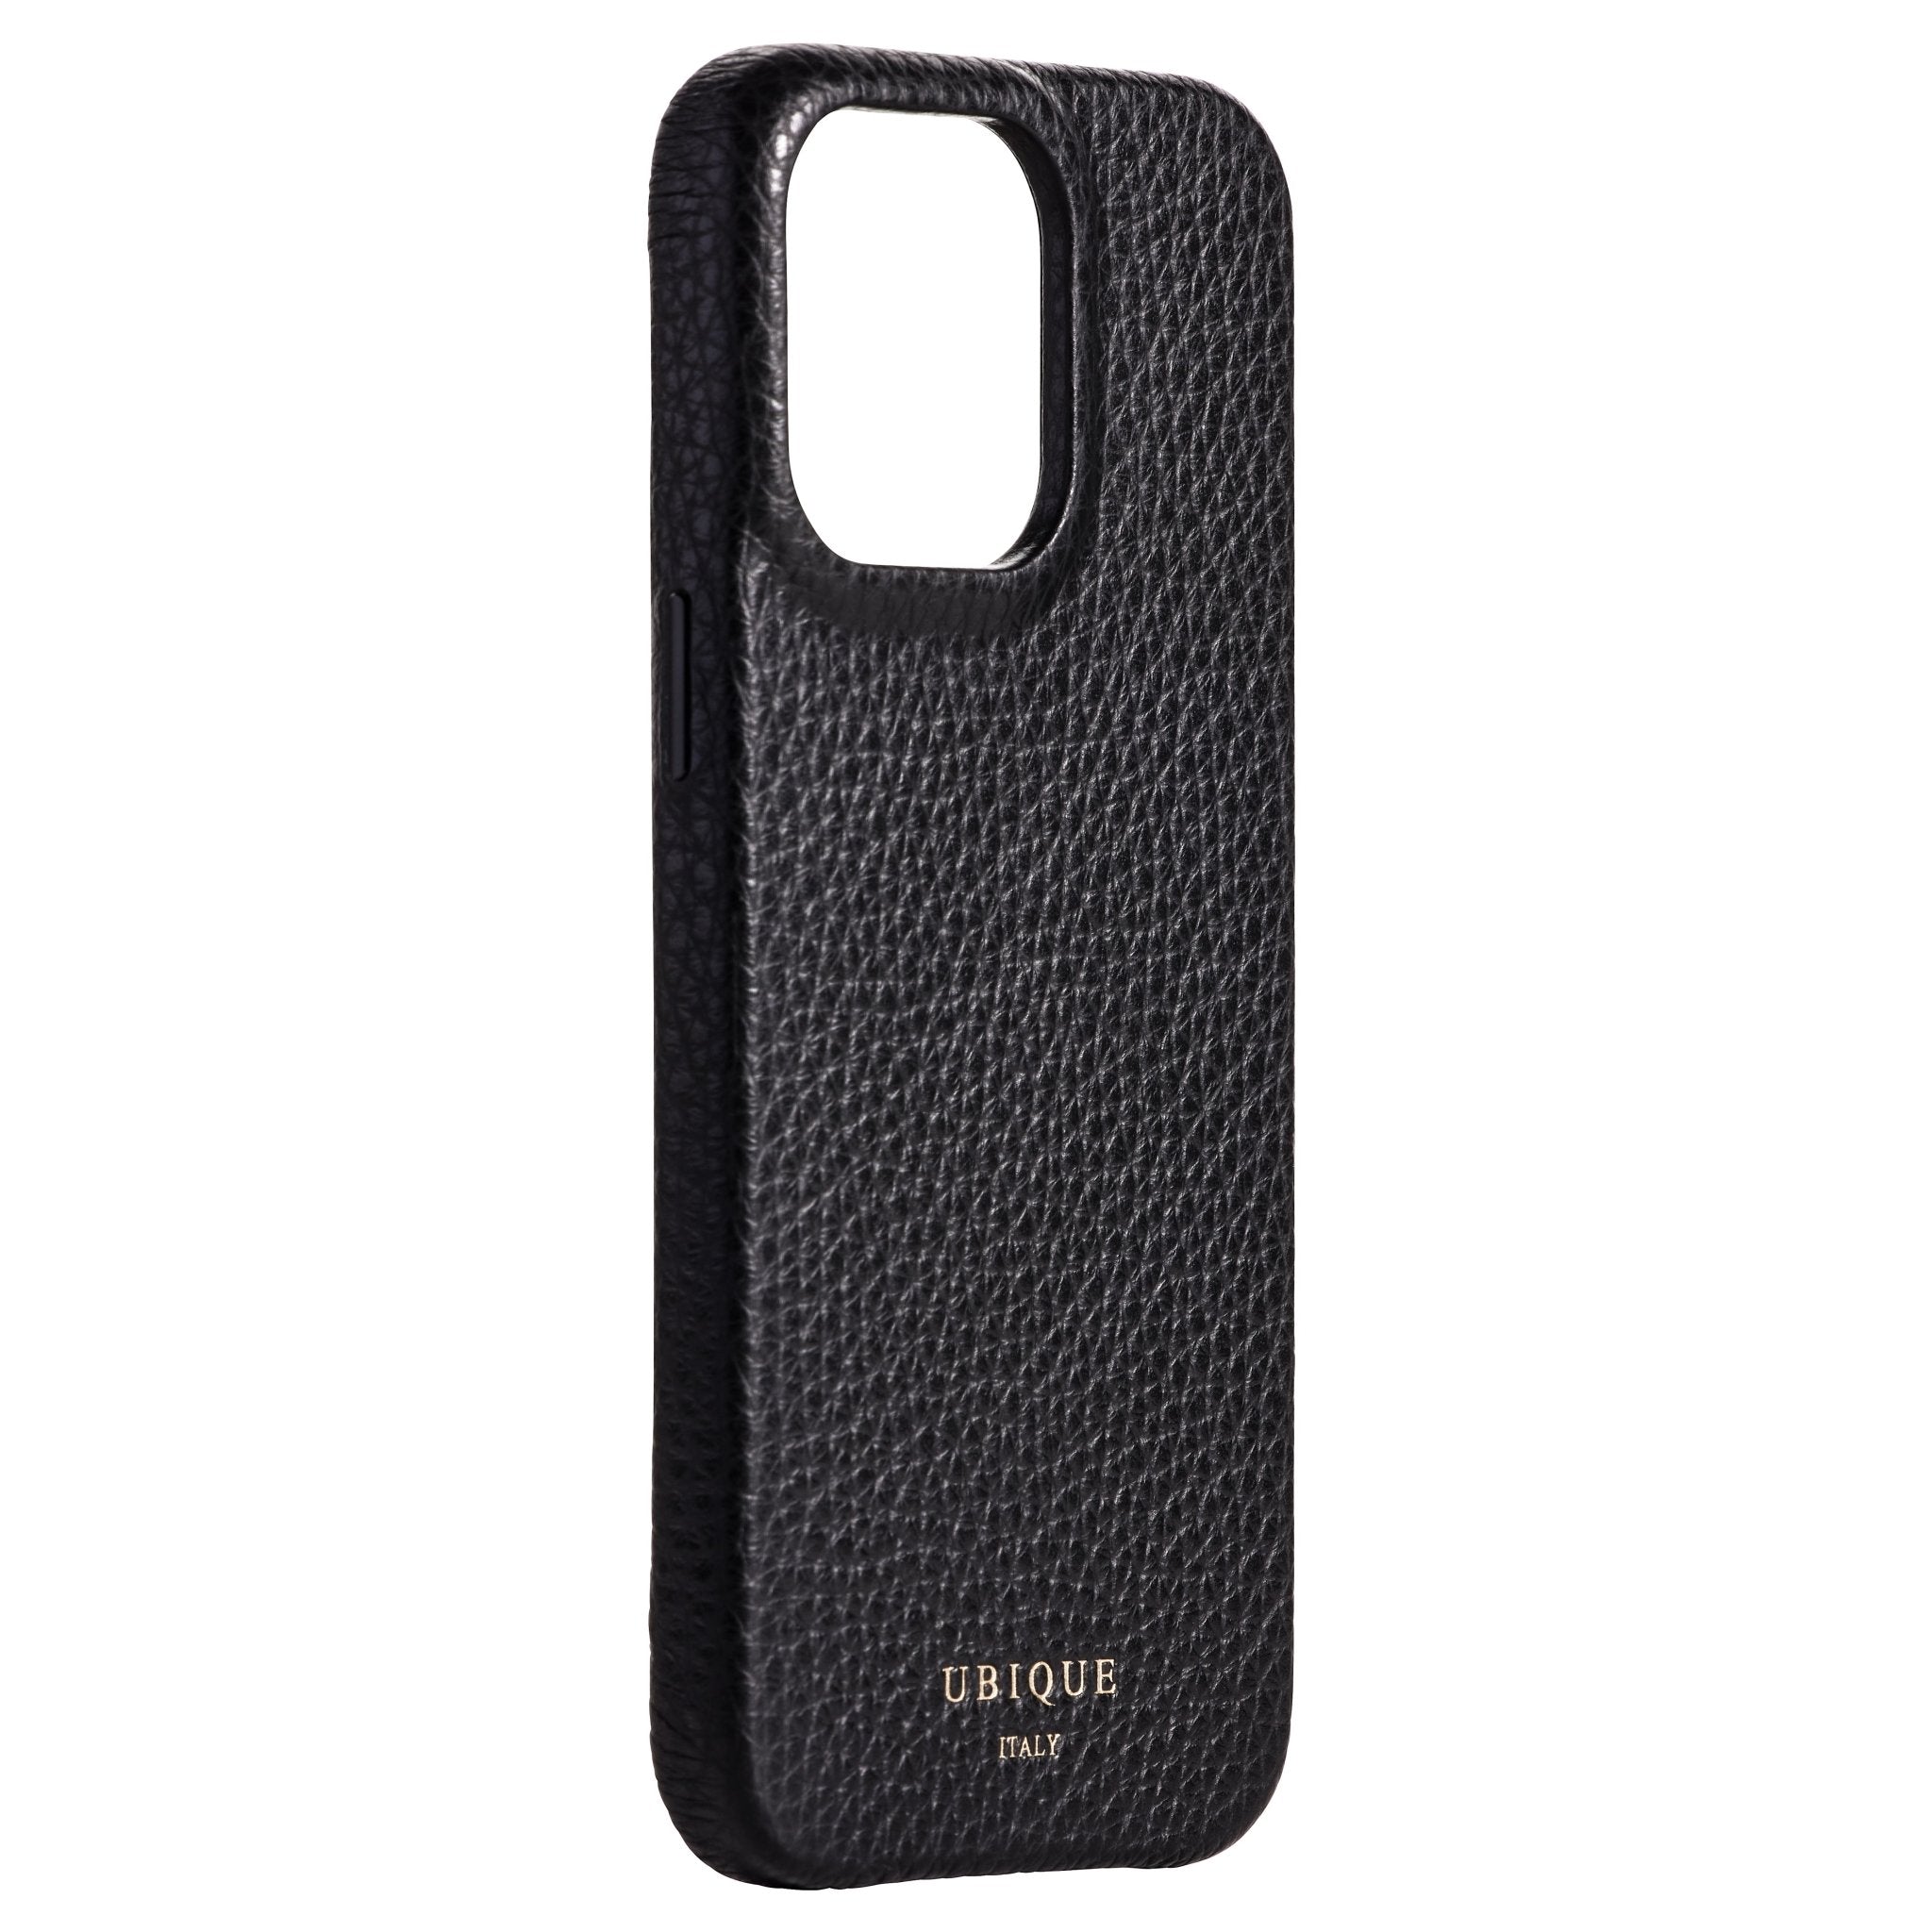 Ubique Italy Luxury iPhone Case 14 Pro Max Pebble Grain Leather Classic Black Angled